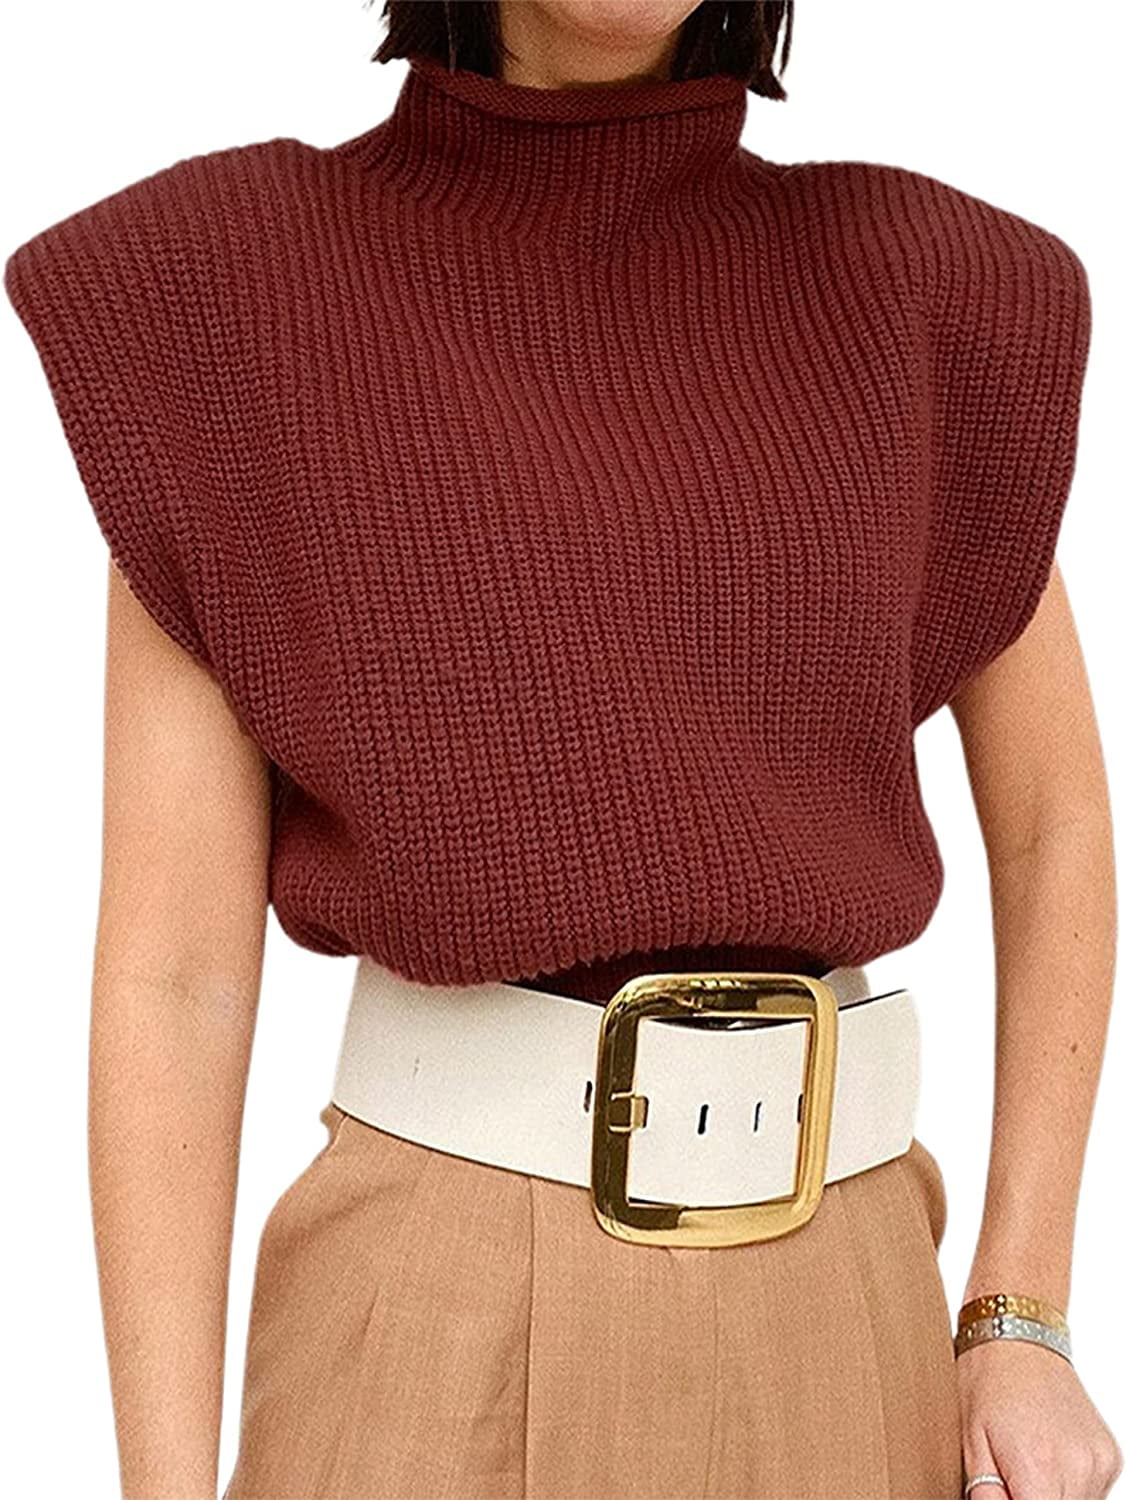 DanceeMangoos Women's High Neck Knit Sweater Vest Shoulder Pads Sleeveless  Ribbed Pullover Top